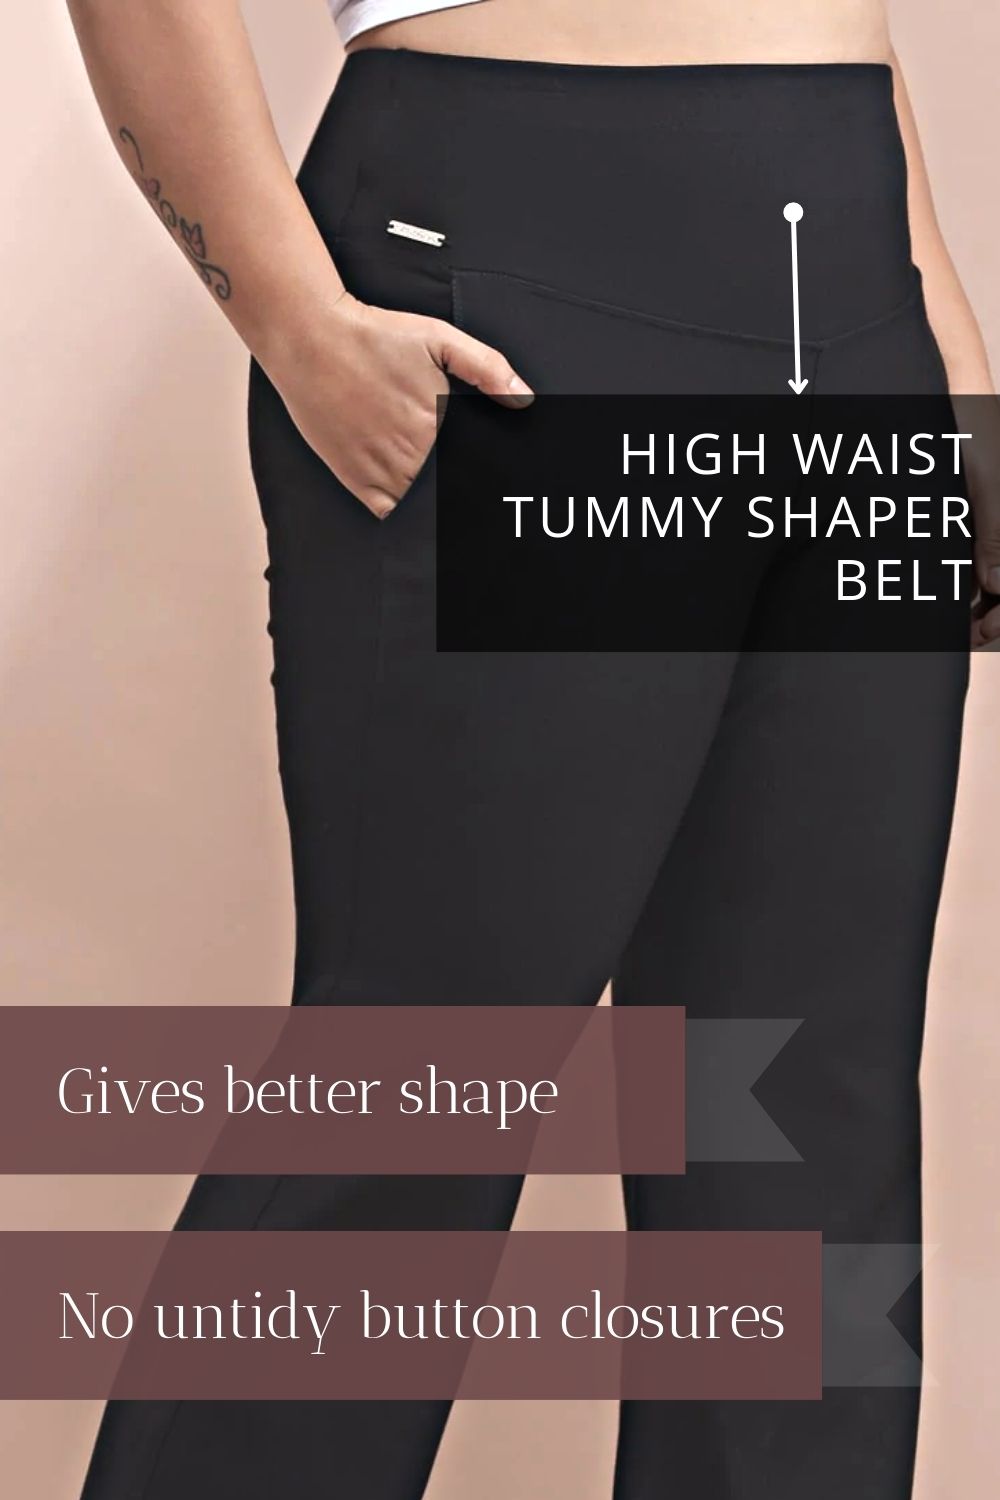 Buy AMYDUS Plus Size Women Tummy Shaper Shorts, High-Waist, Stretchable, Wide Waistband, Cloud Soft Fabric